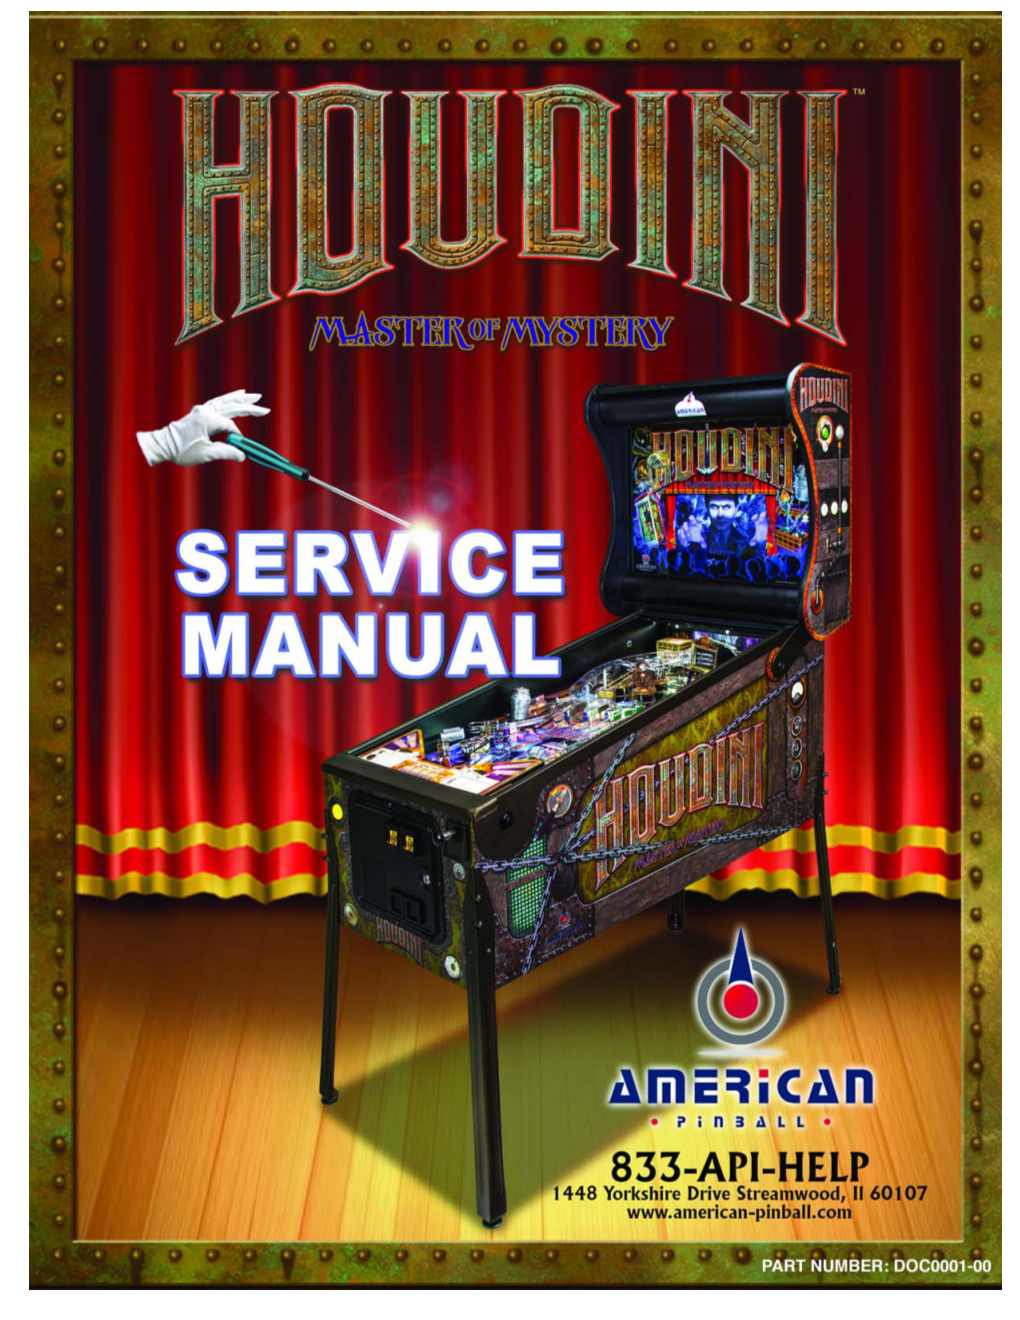 Houdini Service Manual